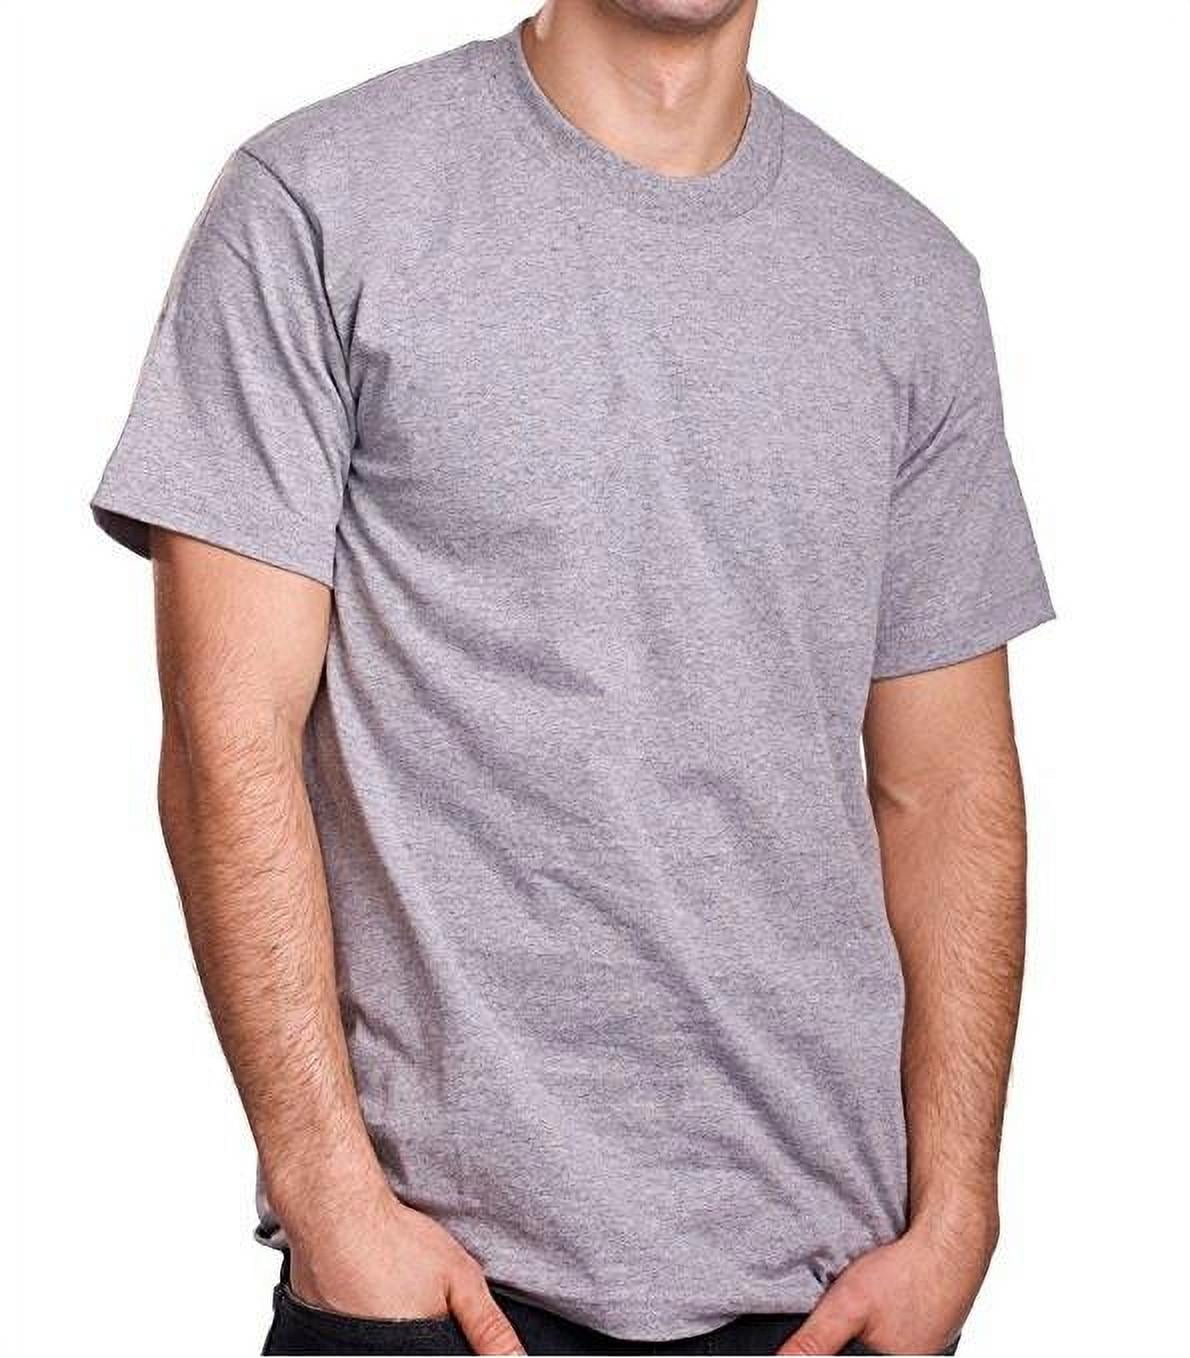 Pro 5 Superheavy Short T-shirt,Heather Grey,4XL - Walmart.com